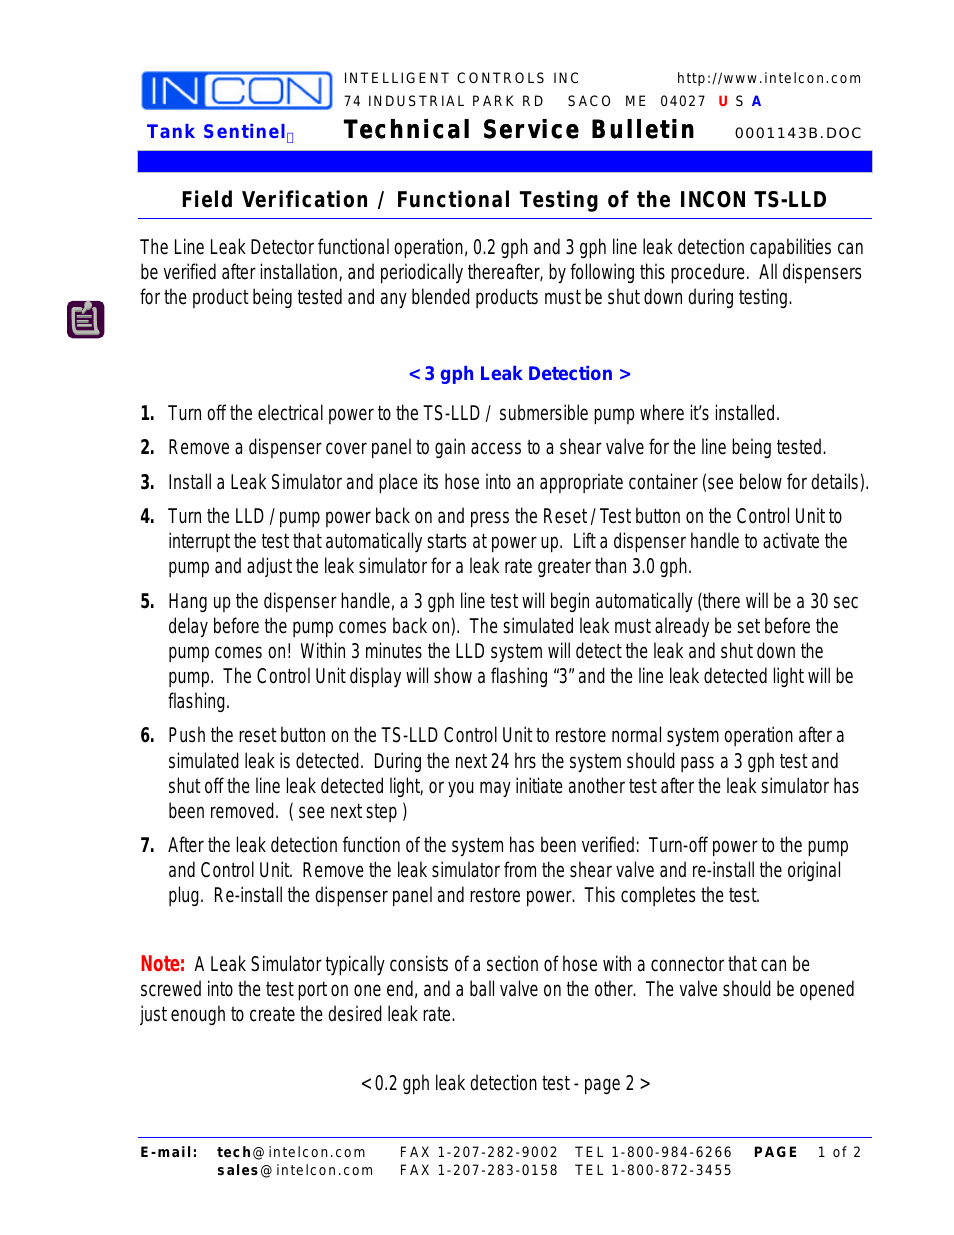 TS-LLD Field Verification : Functional Testing of the INCON TS-LLD